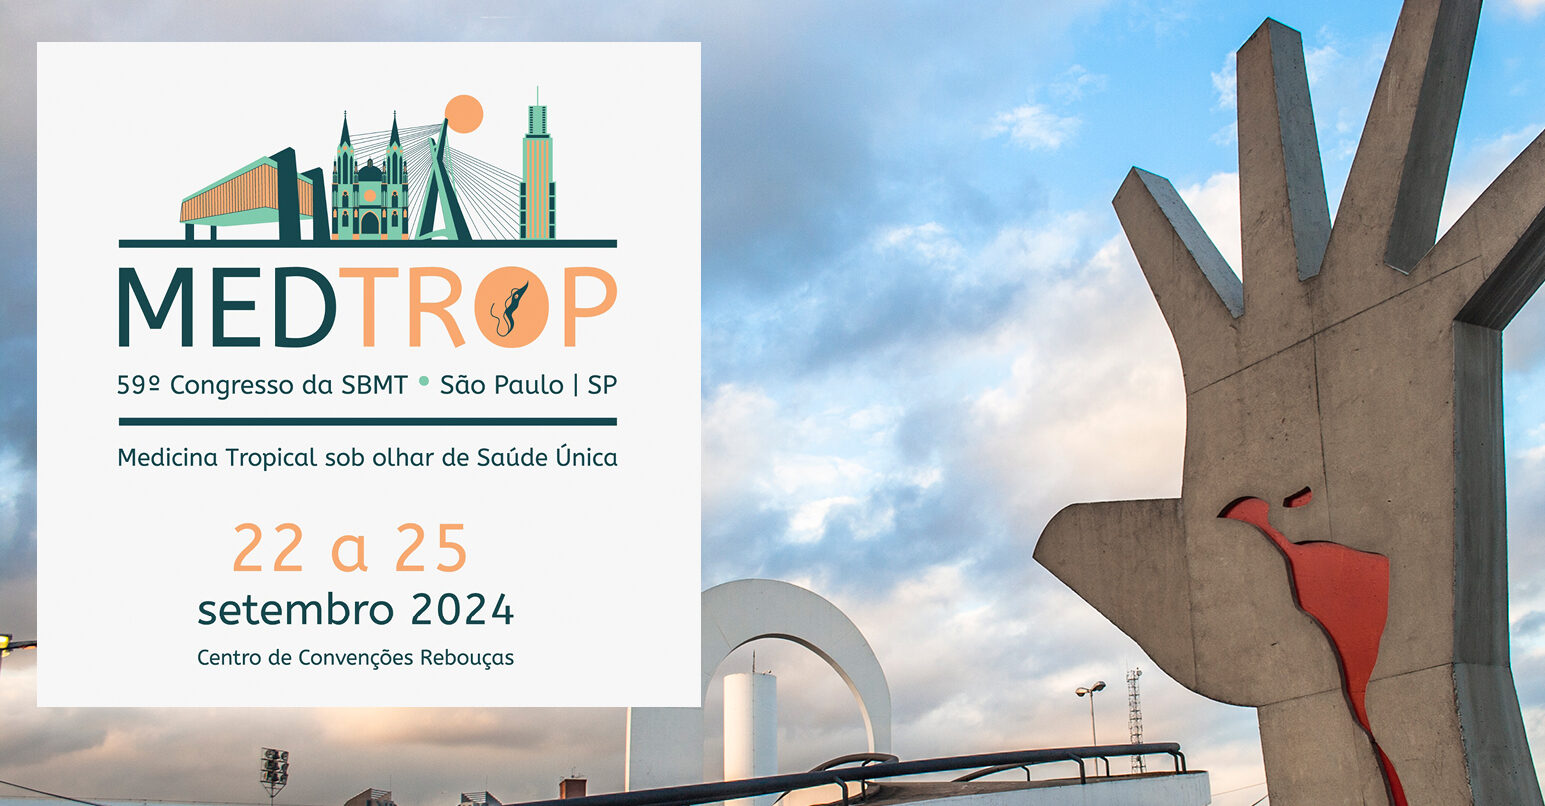 MEDTROP 2024 – São Paulo